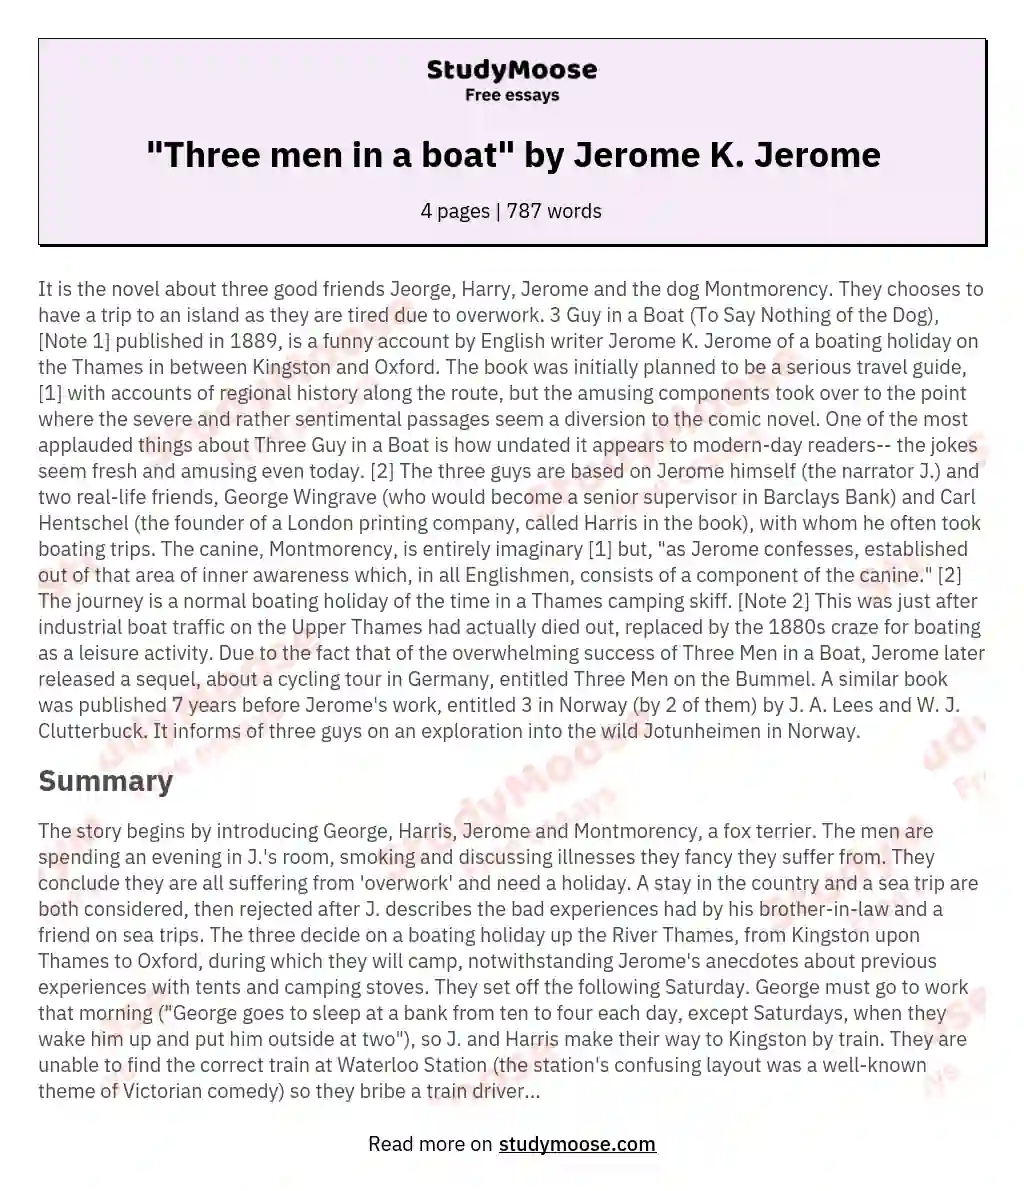 "Three men in a boat" by Jerome K. Jerome essay